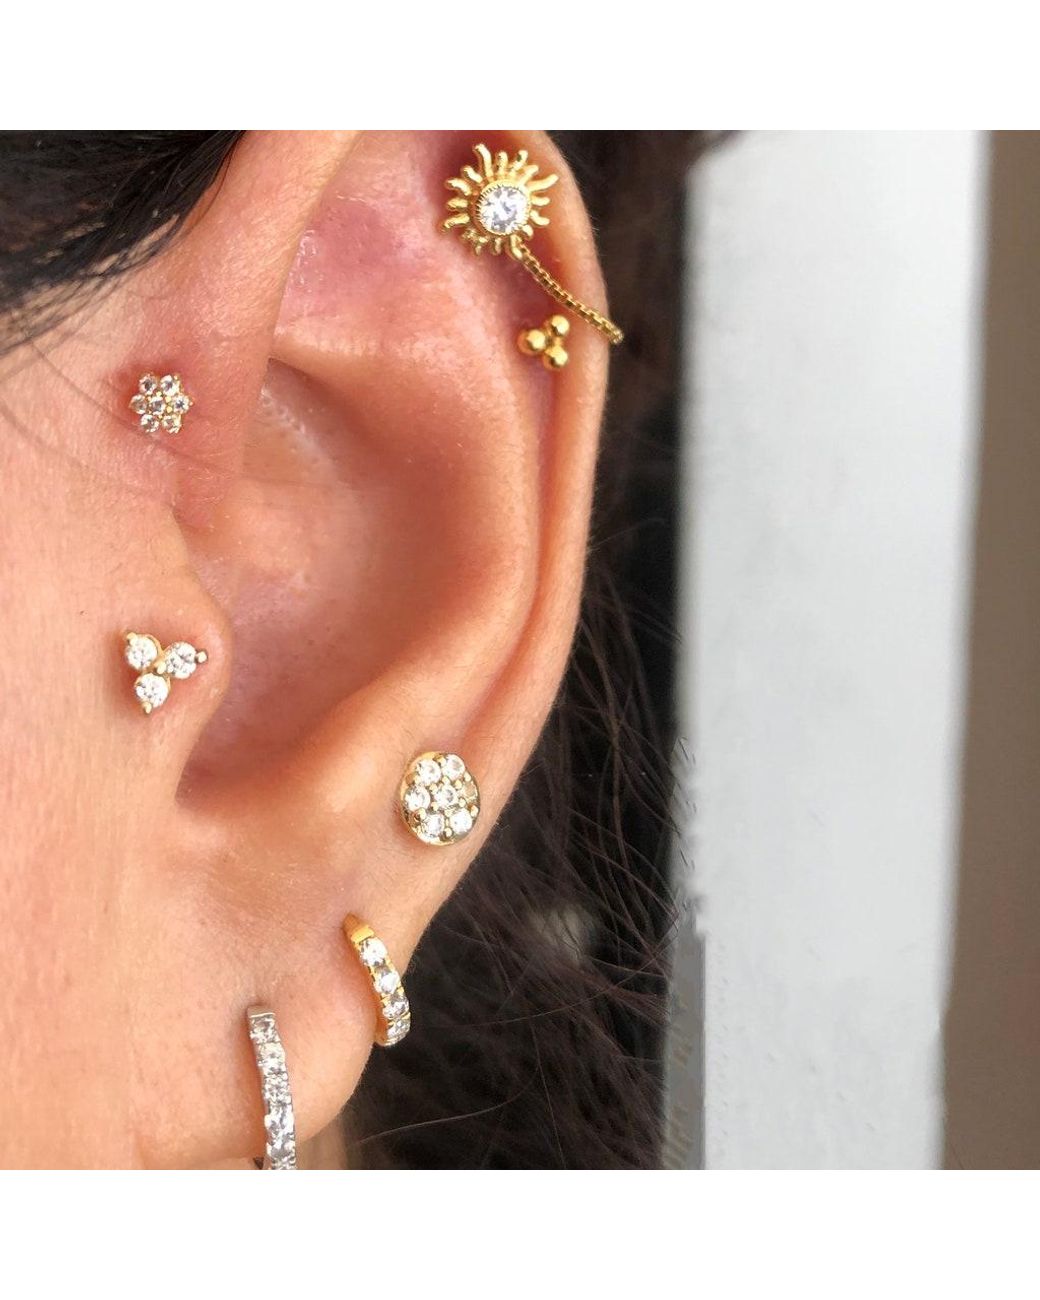 18G Gold Tiny Leaf Cartilage Earring • leaf tragus stud • conch earring • tragus • helix • cartilage piercing • minimalist • FLAT BACK